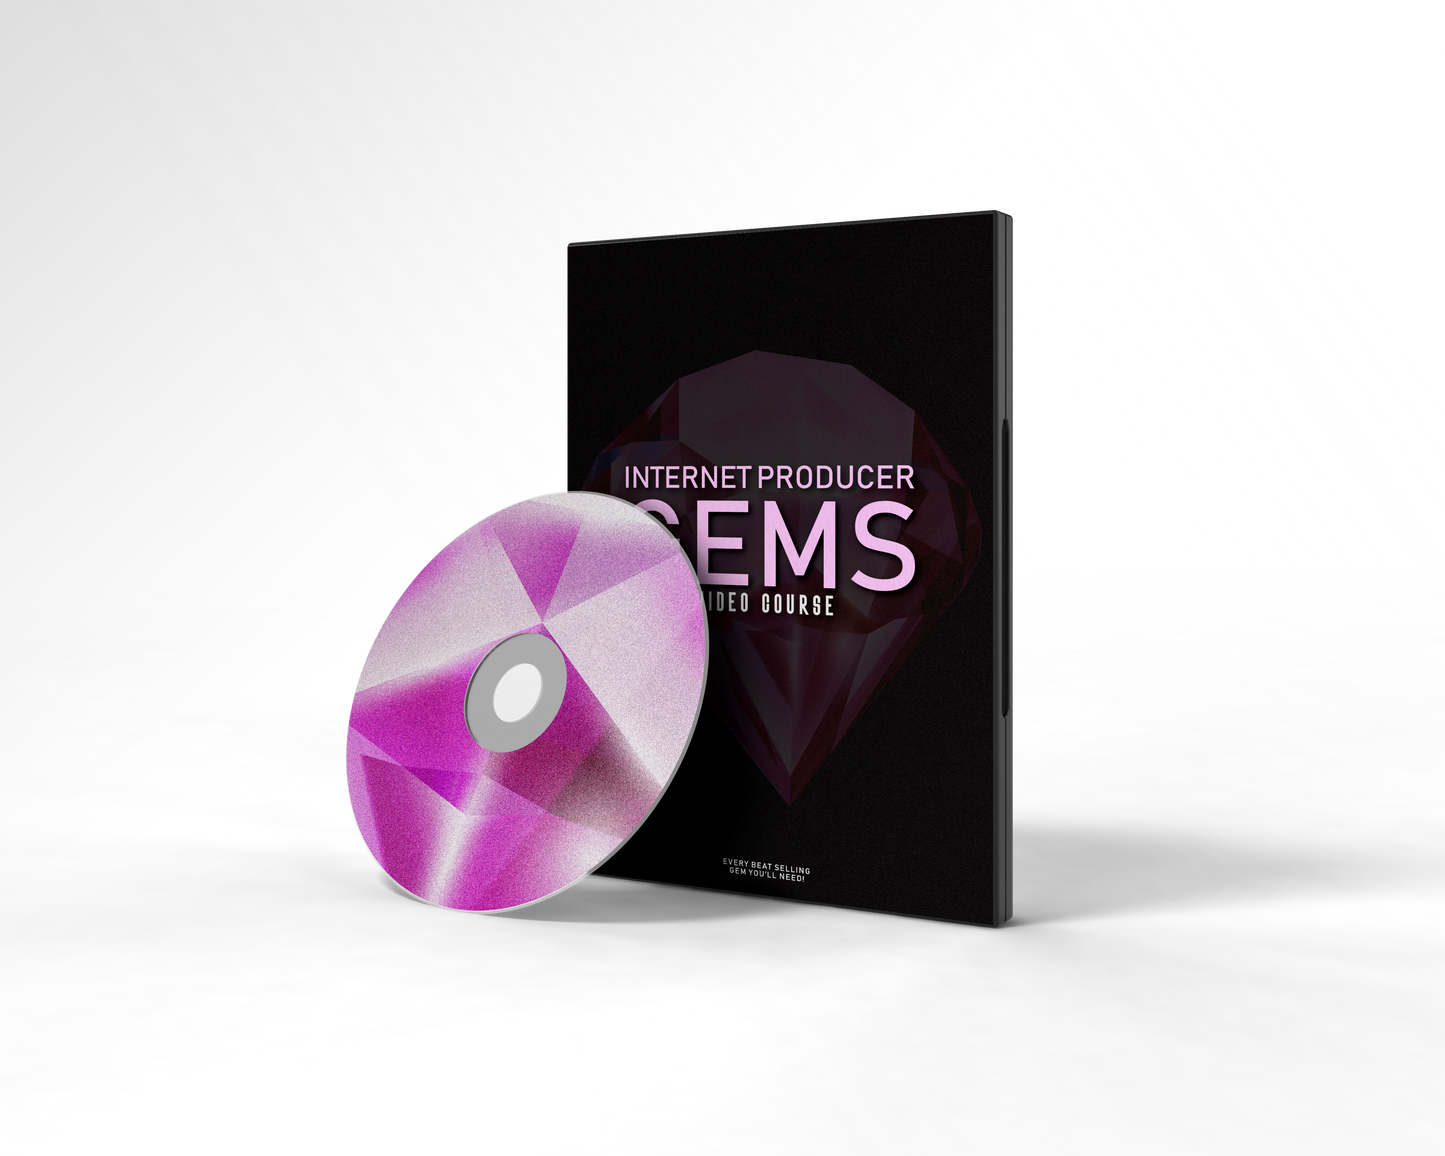 Internet Producer Gems - Video Course